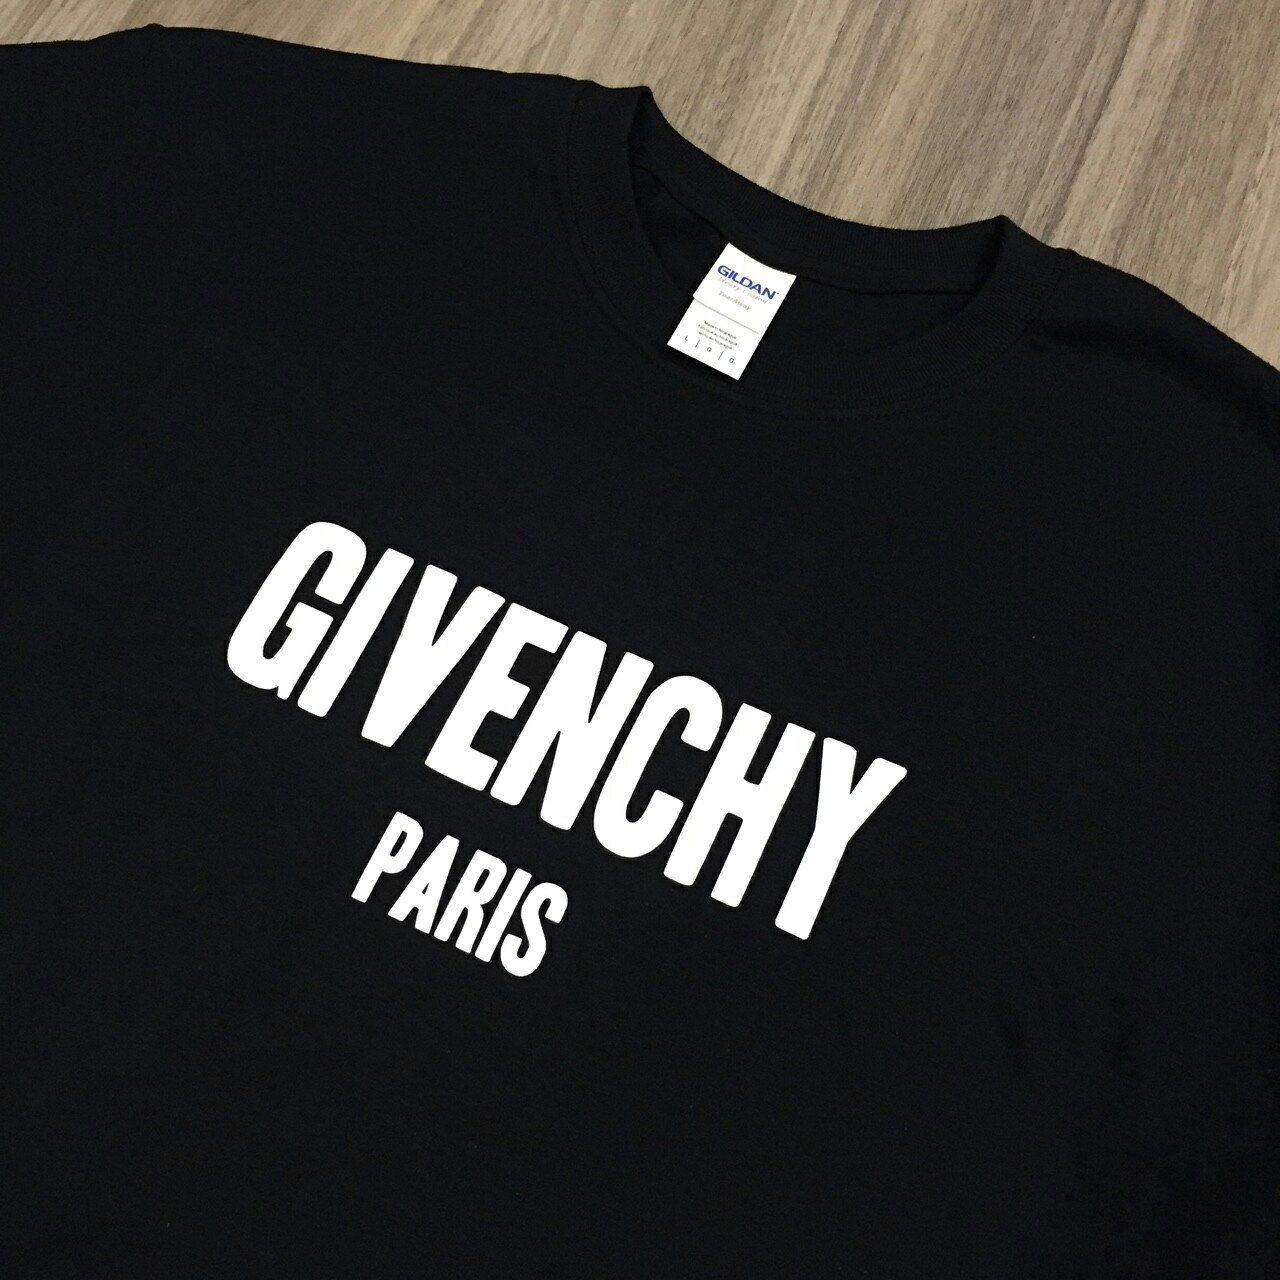 Givenchy Paris Logo - Givenchy Paris Unisex T Shirt Balenciaga Gucci Louis Chanel Dior